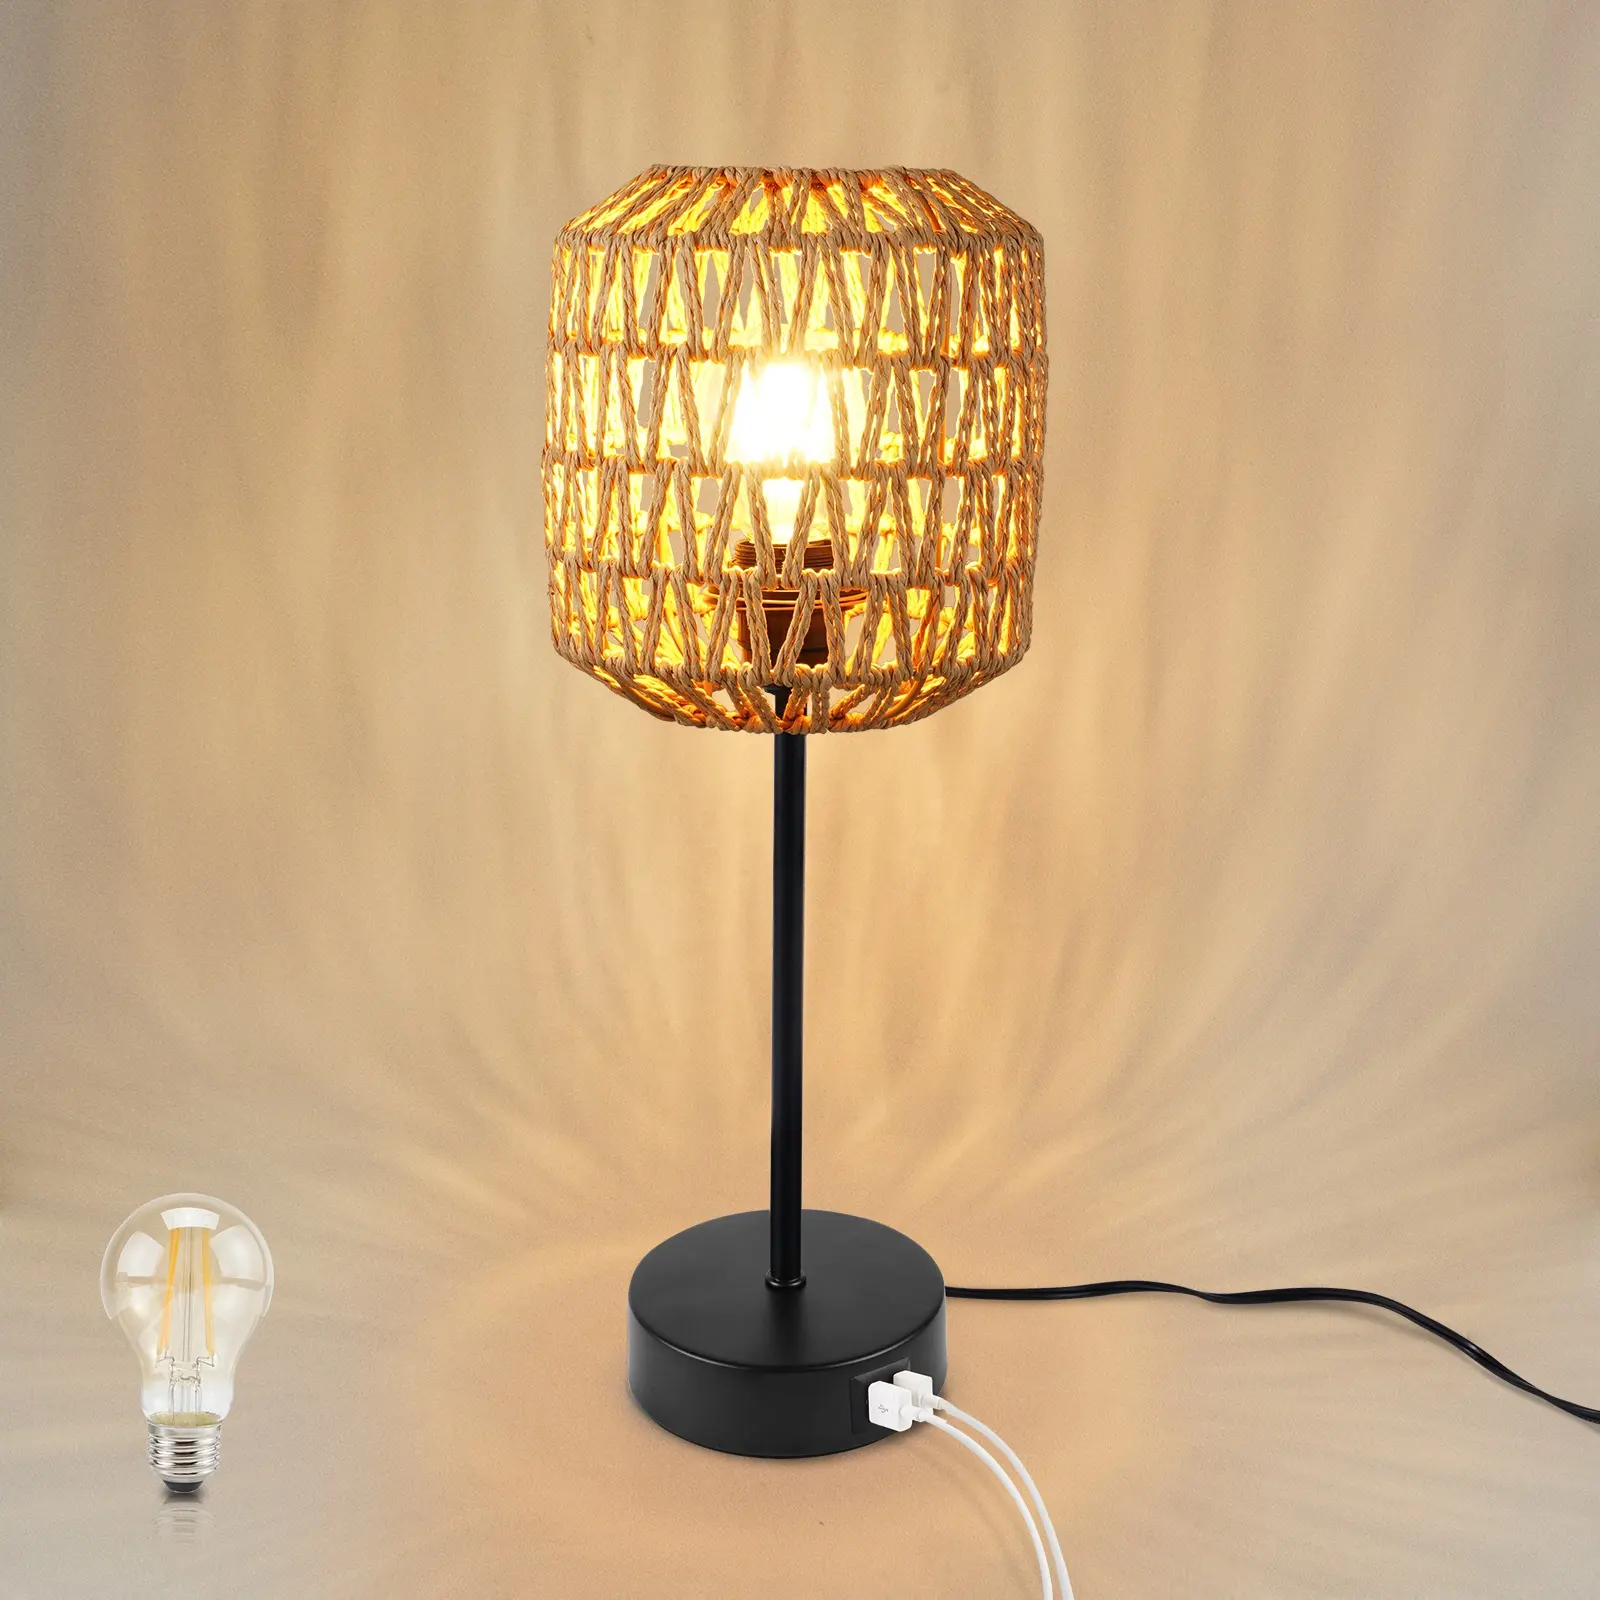 HYMELA N02, lámpara de mesa de ratán tejida a mano, luz de noche regulable táctil USB, lámpara de mesita de noche para interiores (bombilla incluida)